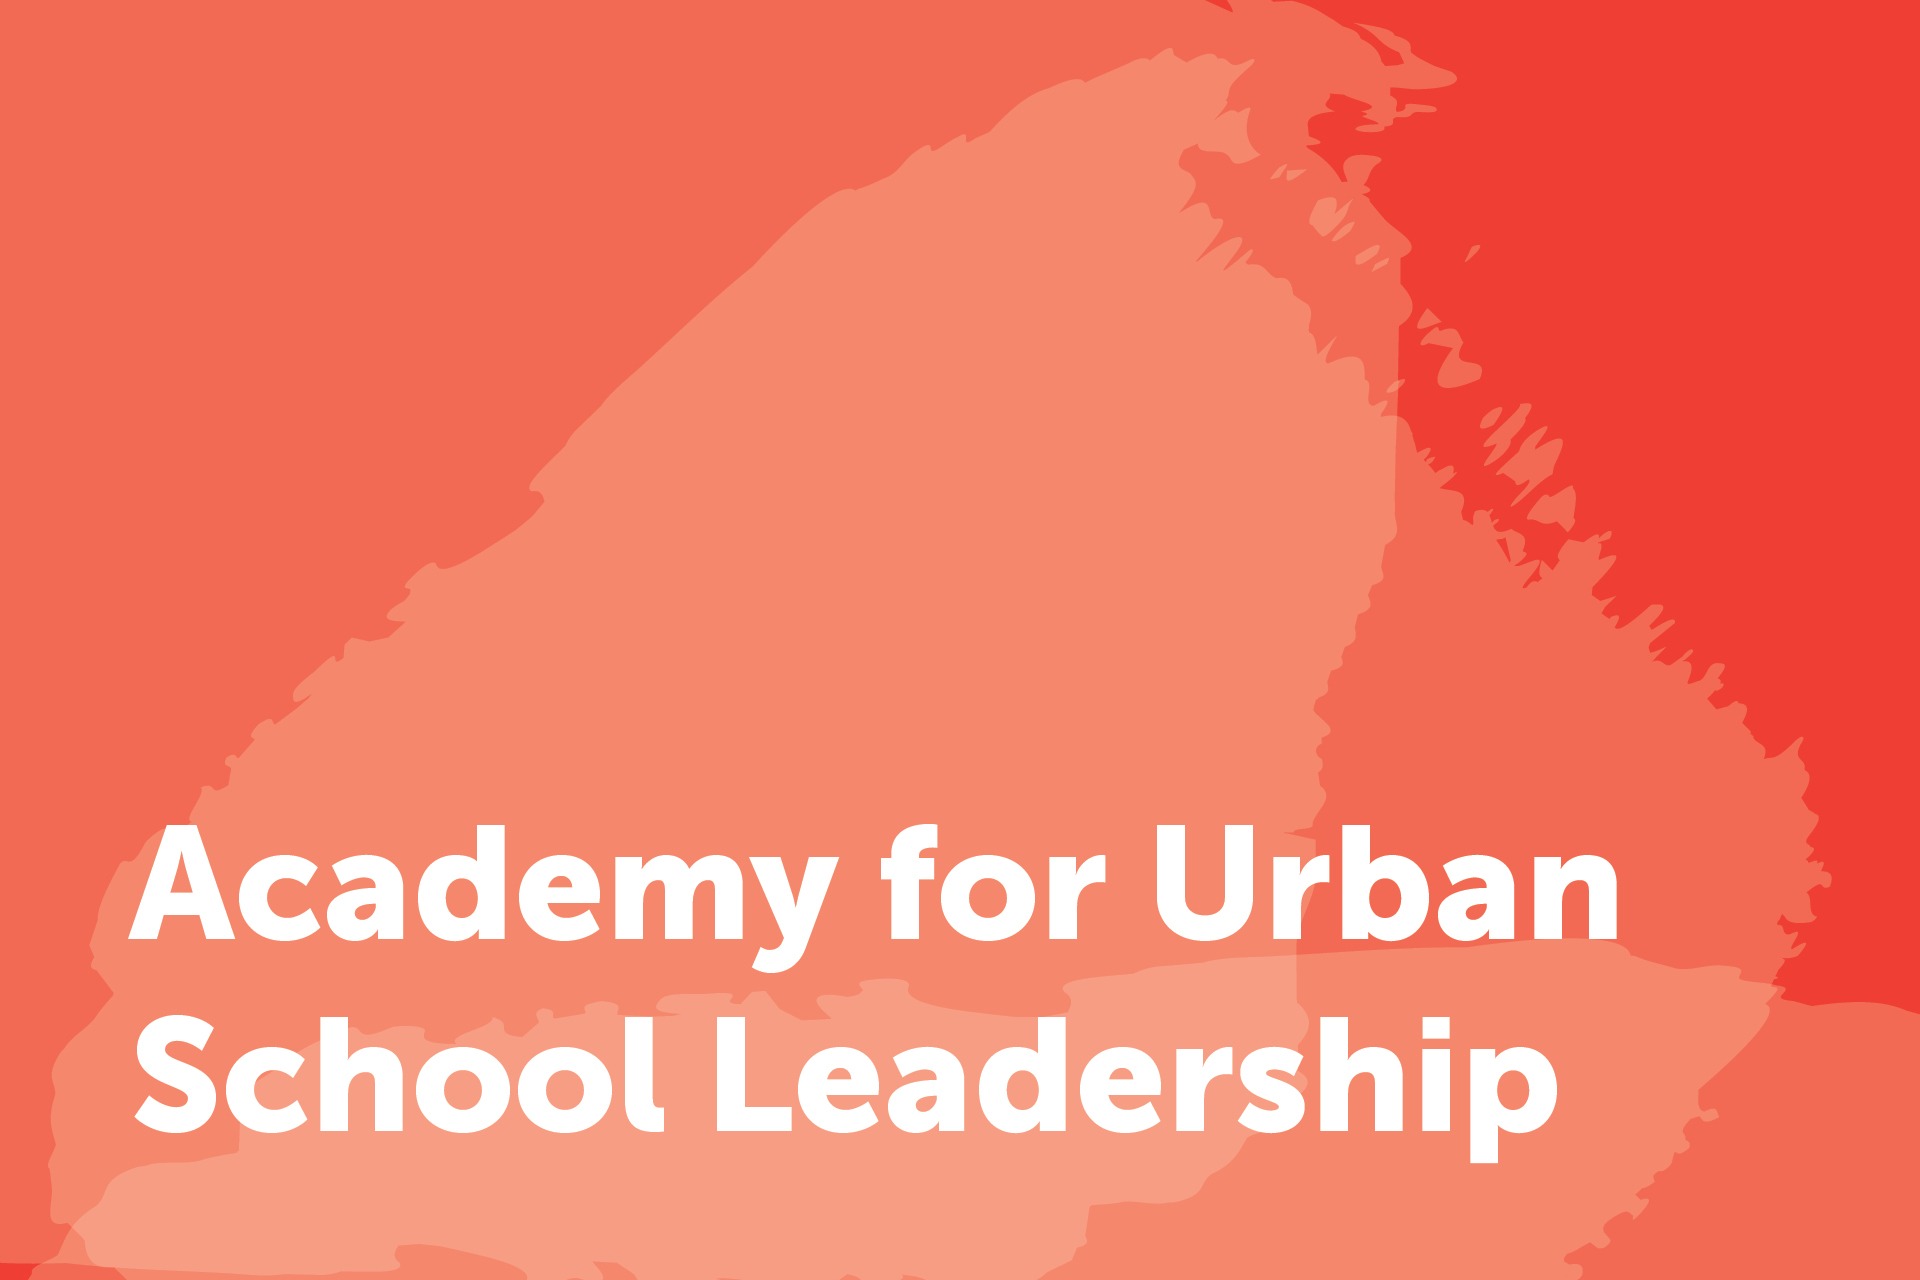 Academy for Urban School Leadership City Year partnership